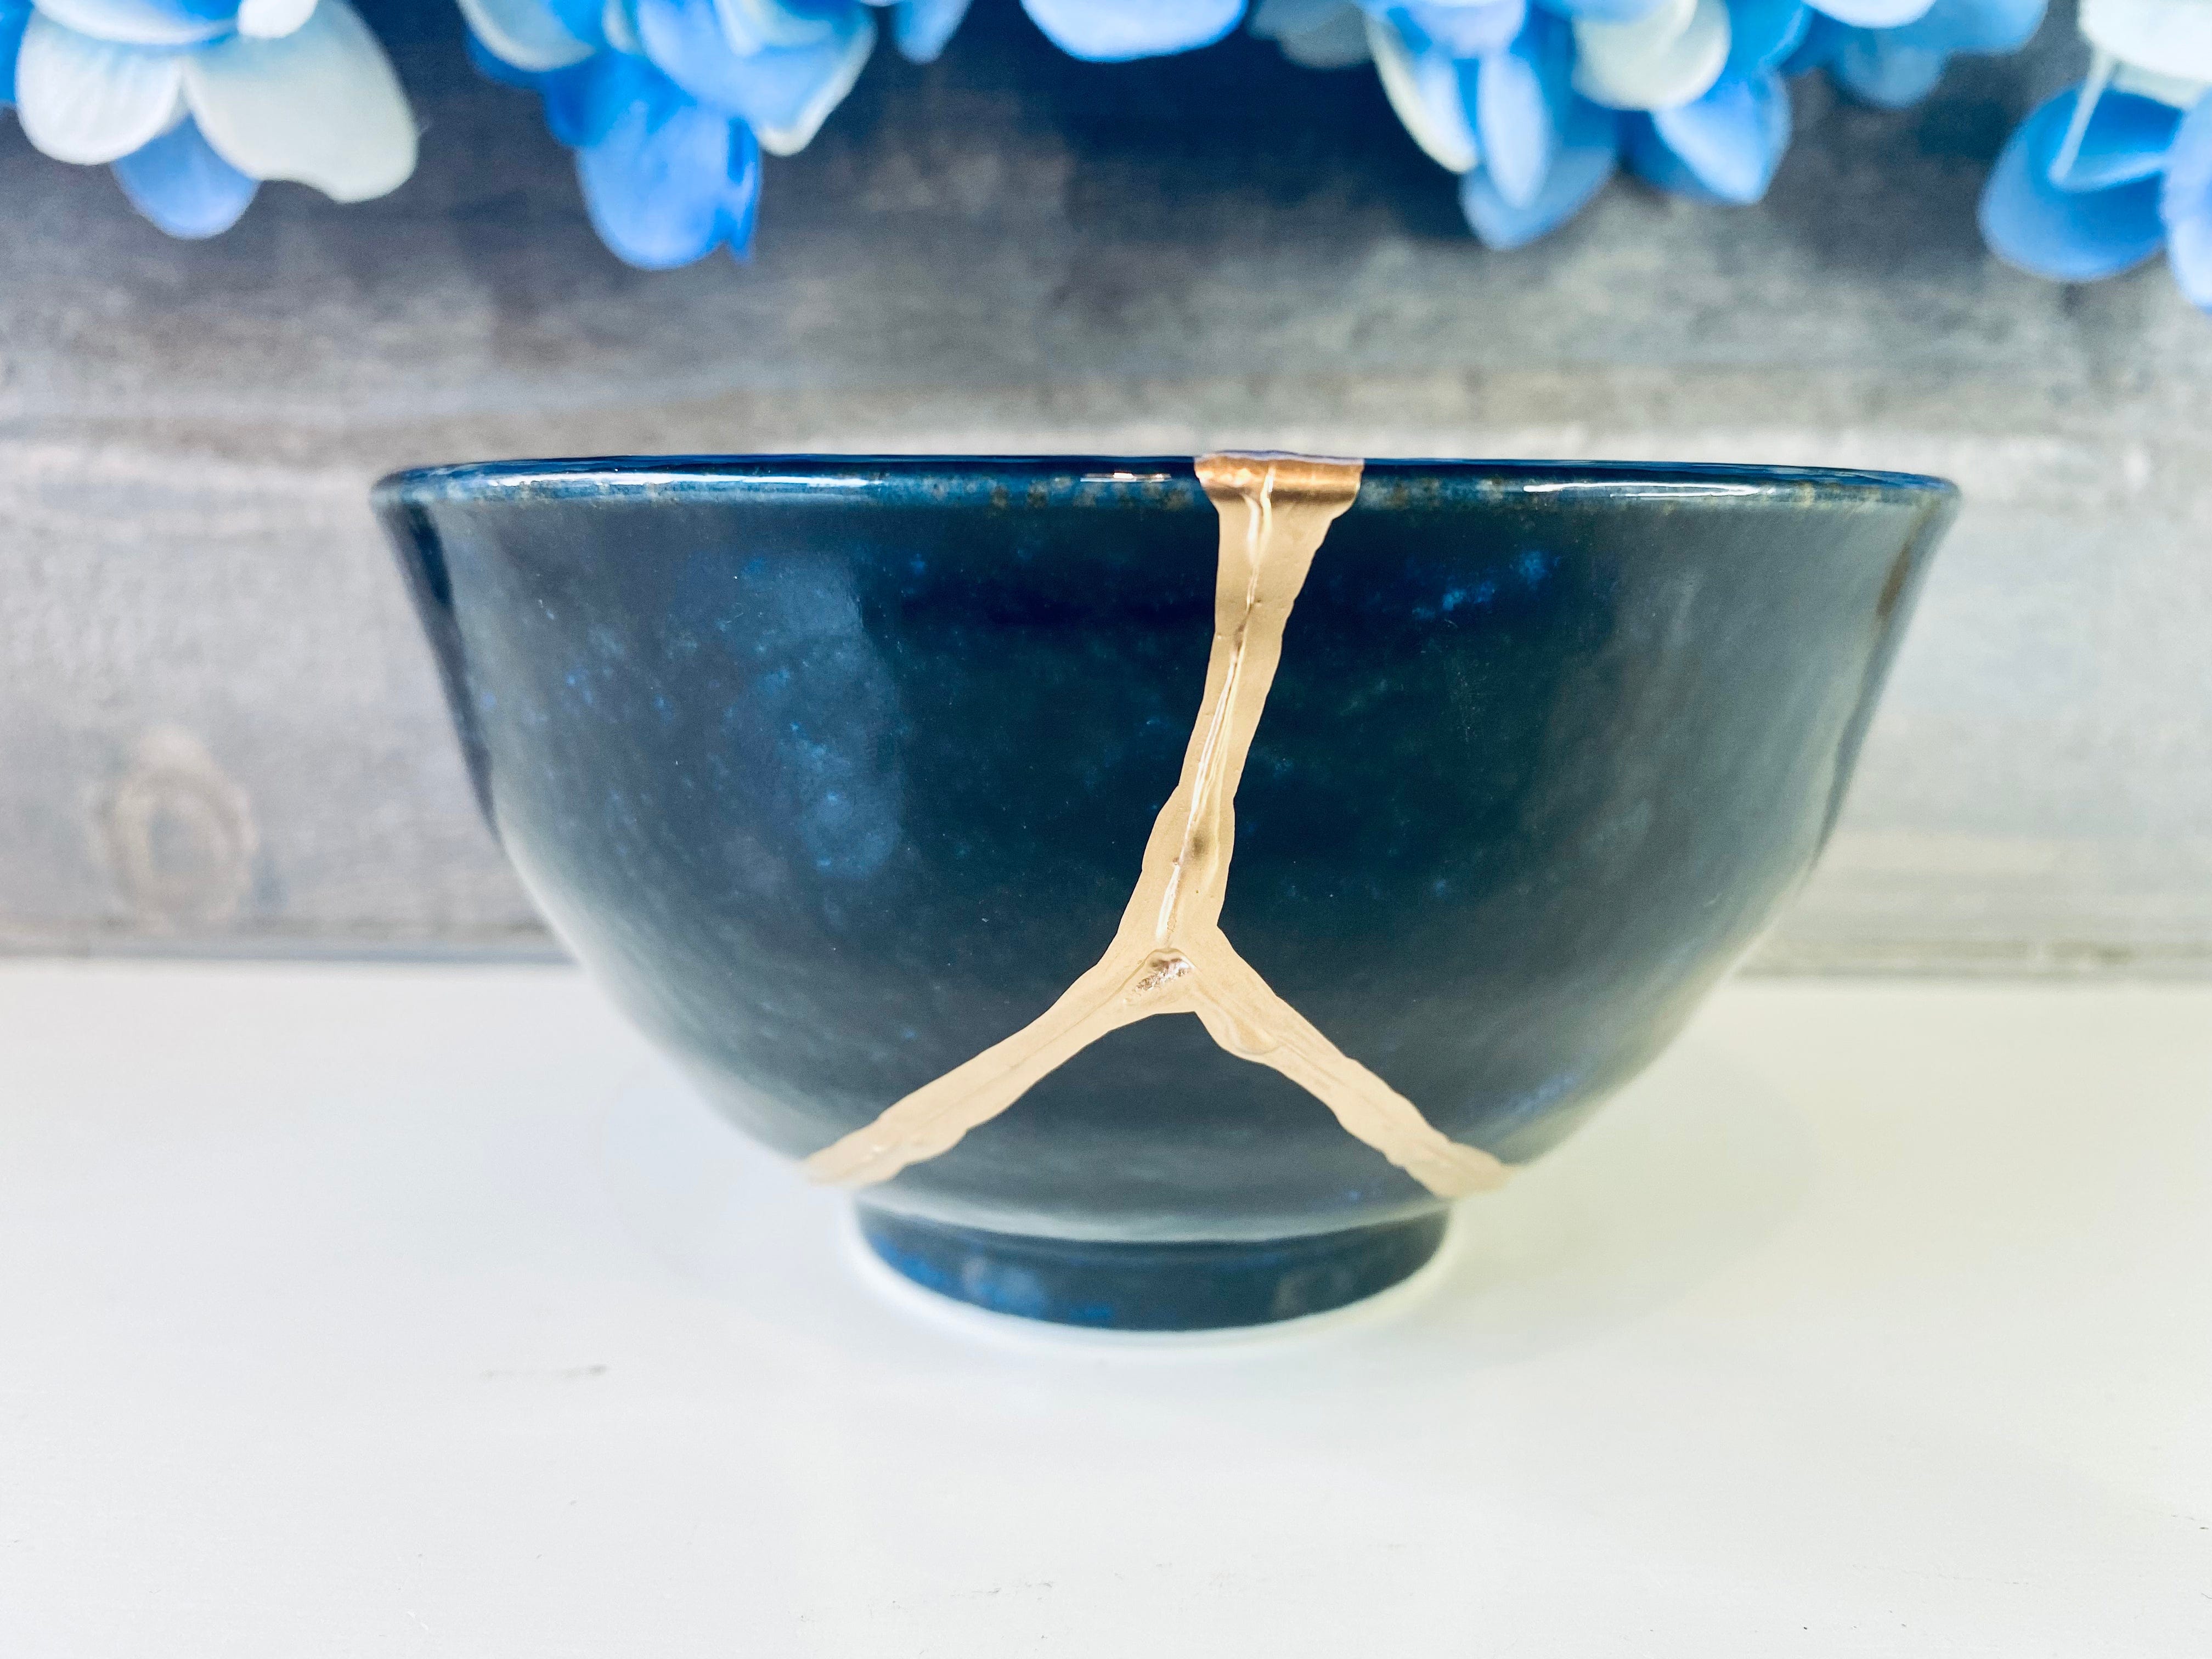 Kintsugi Blue Glaze Stoneware Bowl